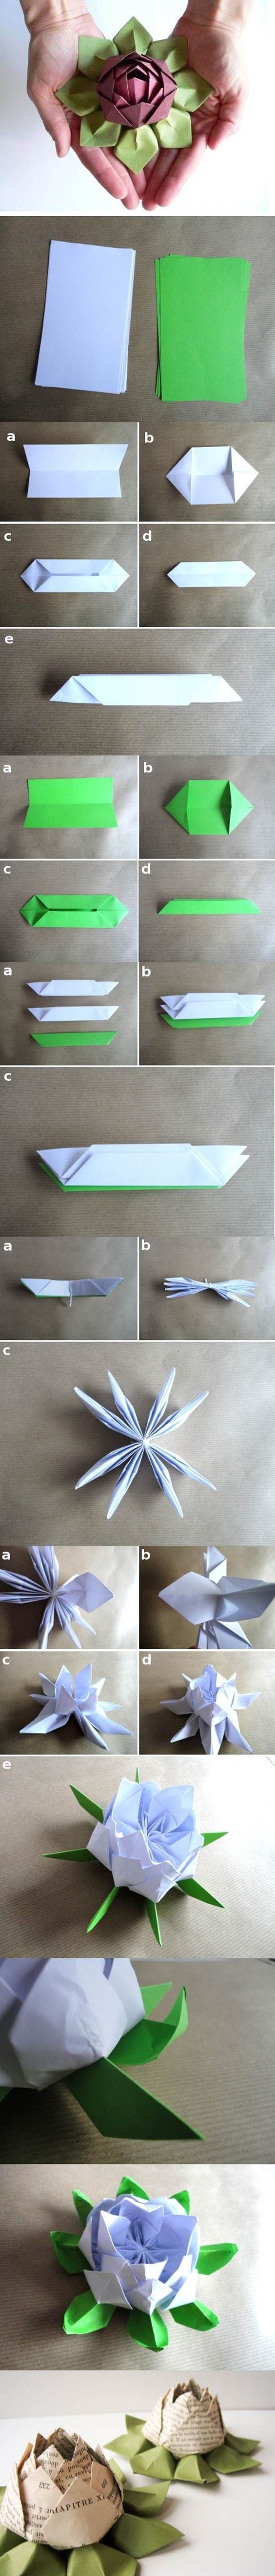 лотос оригами своими руками